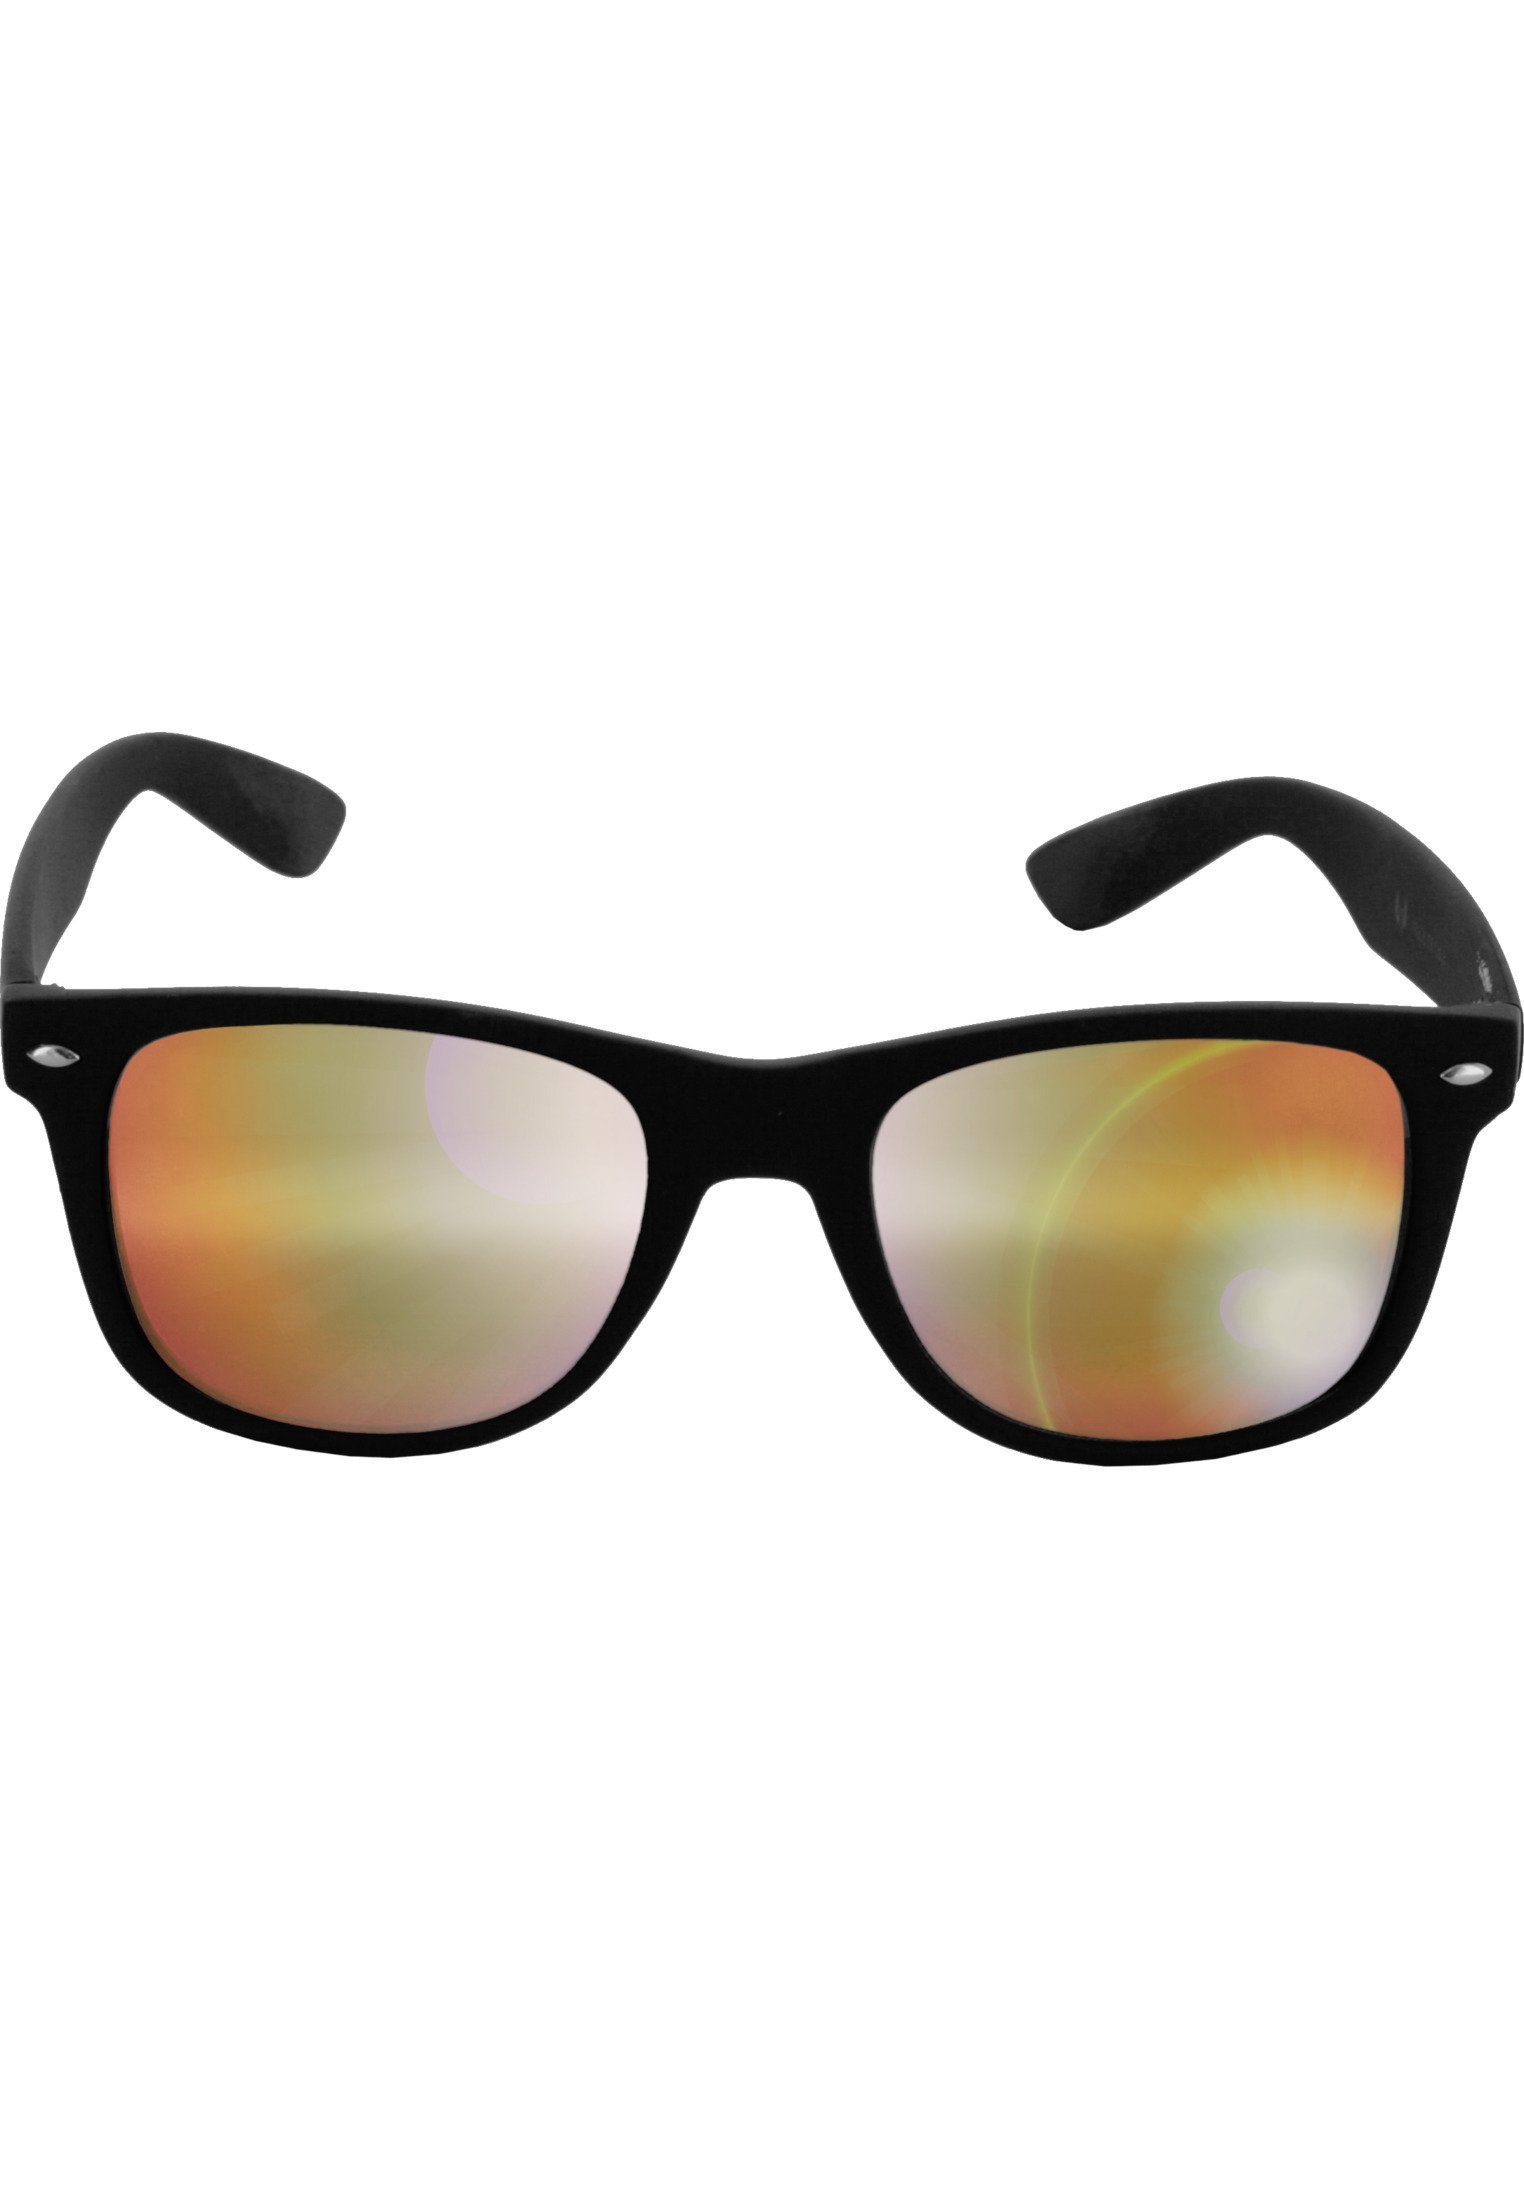 Sunglasses Sonnenbrille Accessoires blk/orange Mirror Likoma MSTRDS